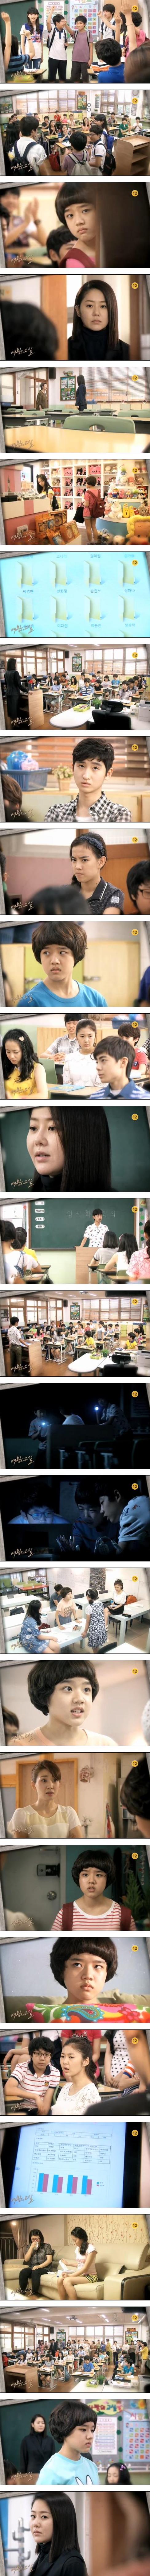 episode 13 captures for the Korean drama 'The Queen's Classroom'